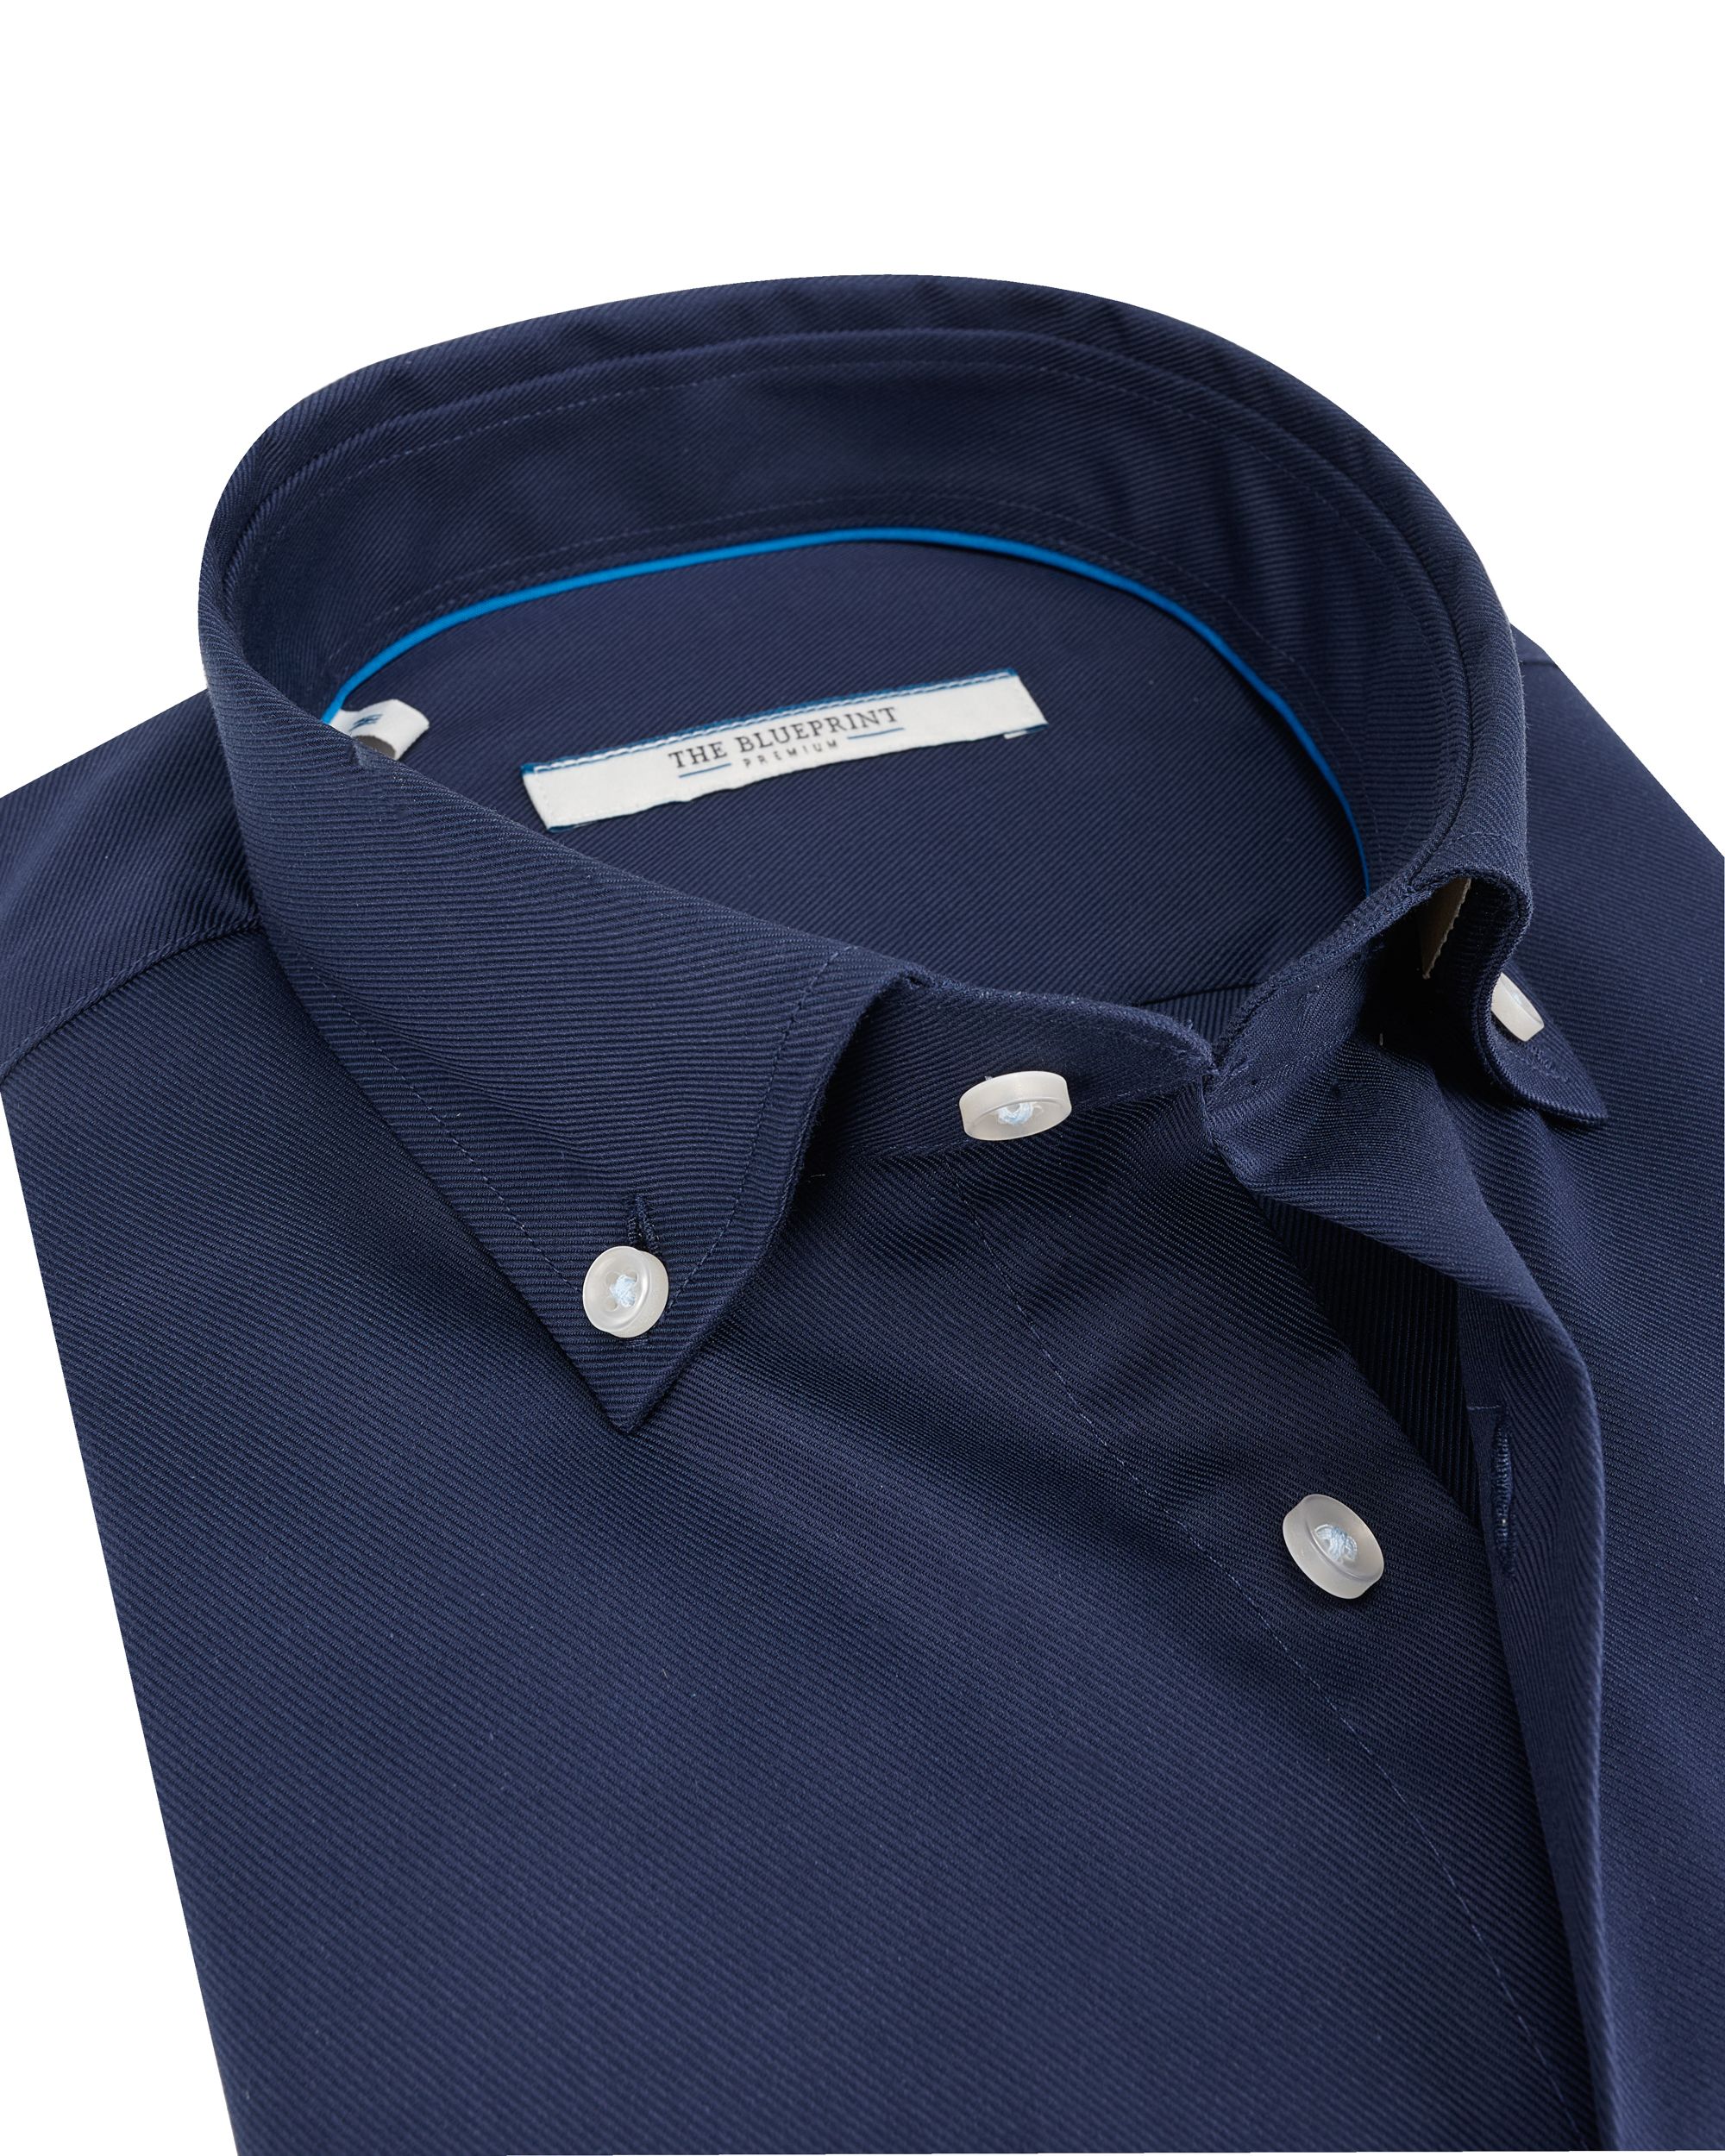 The BLUEPRINT Premium - Trendy overhemd LM Navy 094707-001-L